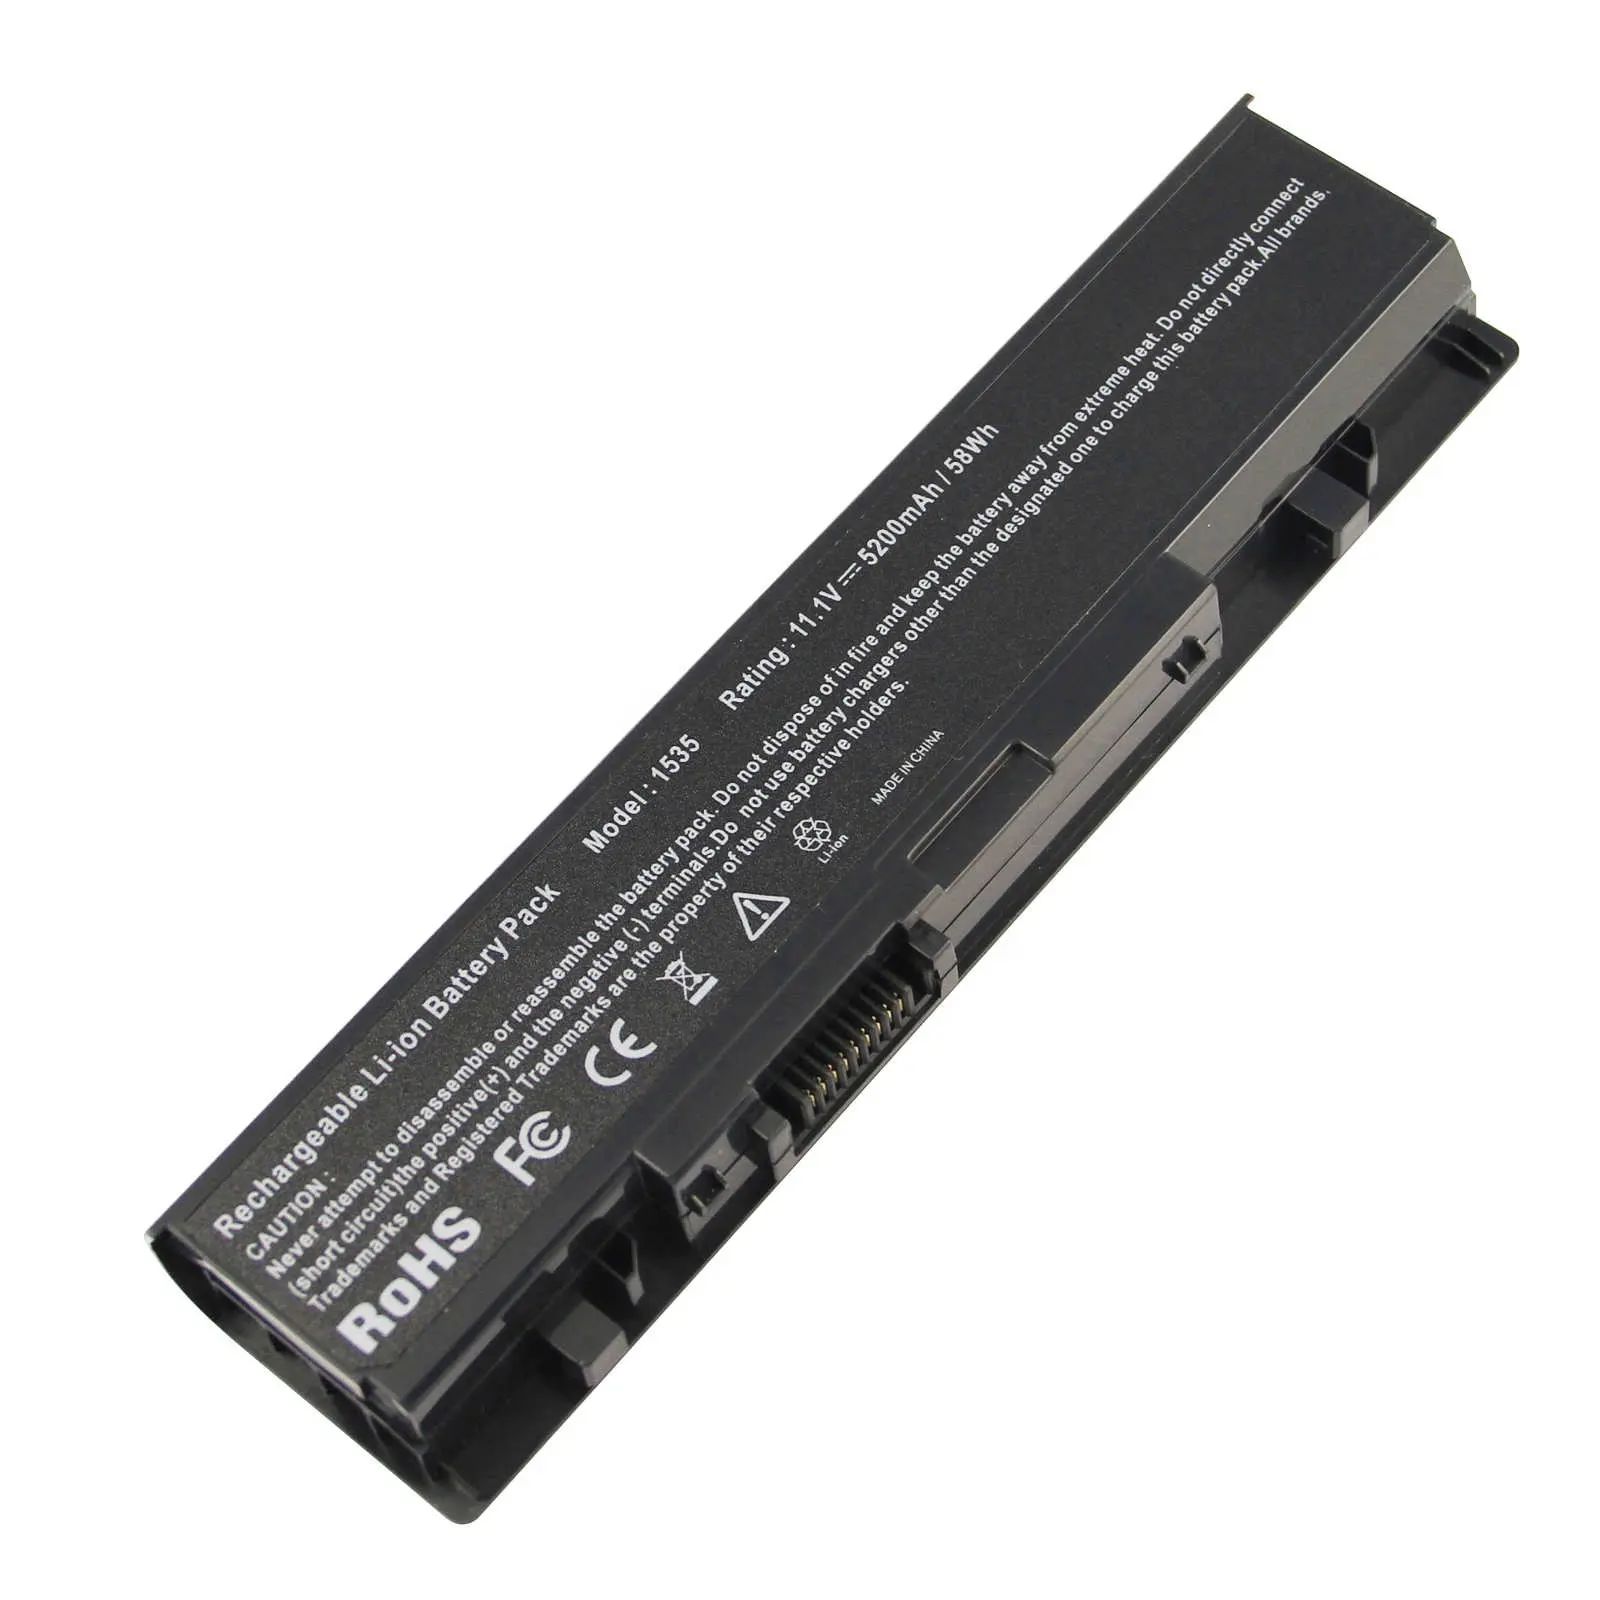 Rechargeable battery for Dell laptop Studio 15 Studio 1535 1536 1537 Compatible battery 0KM887 0MT275